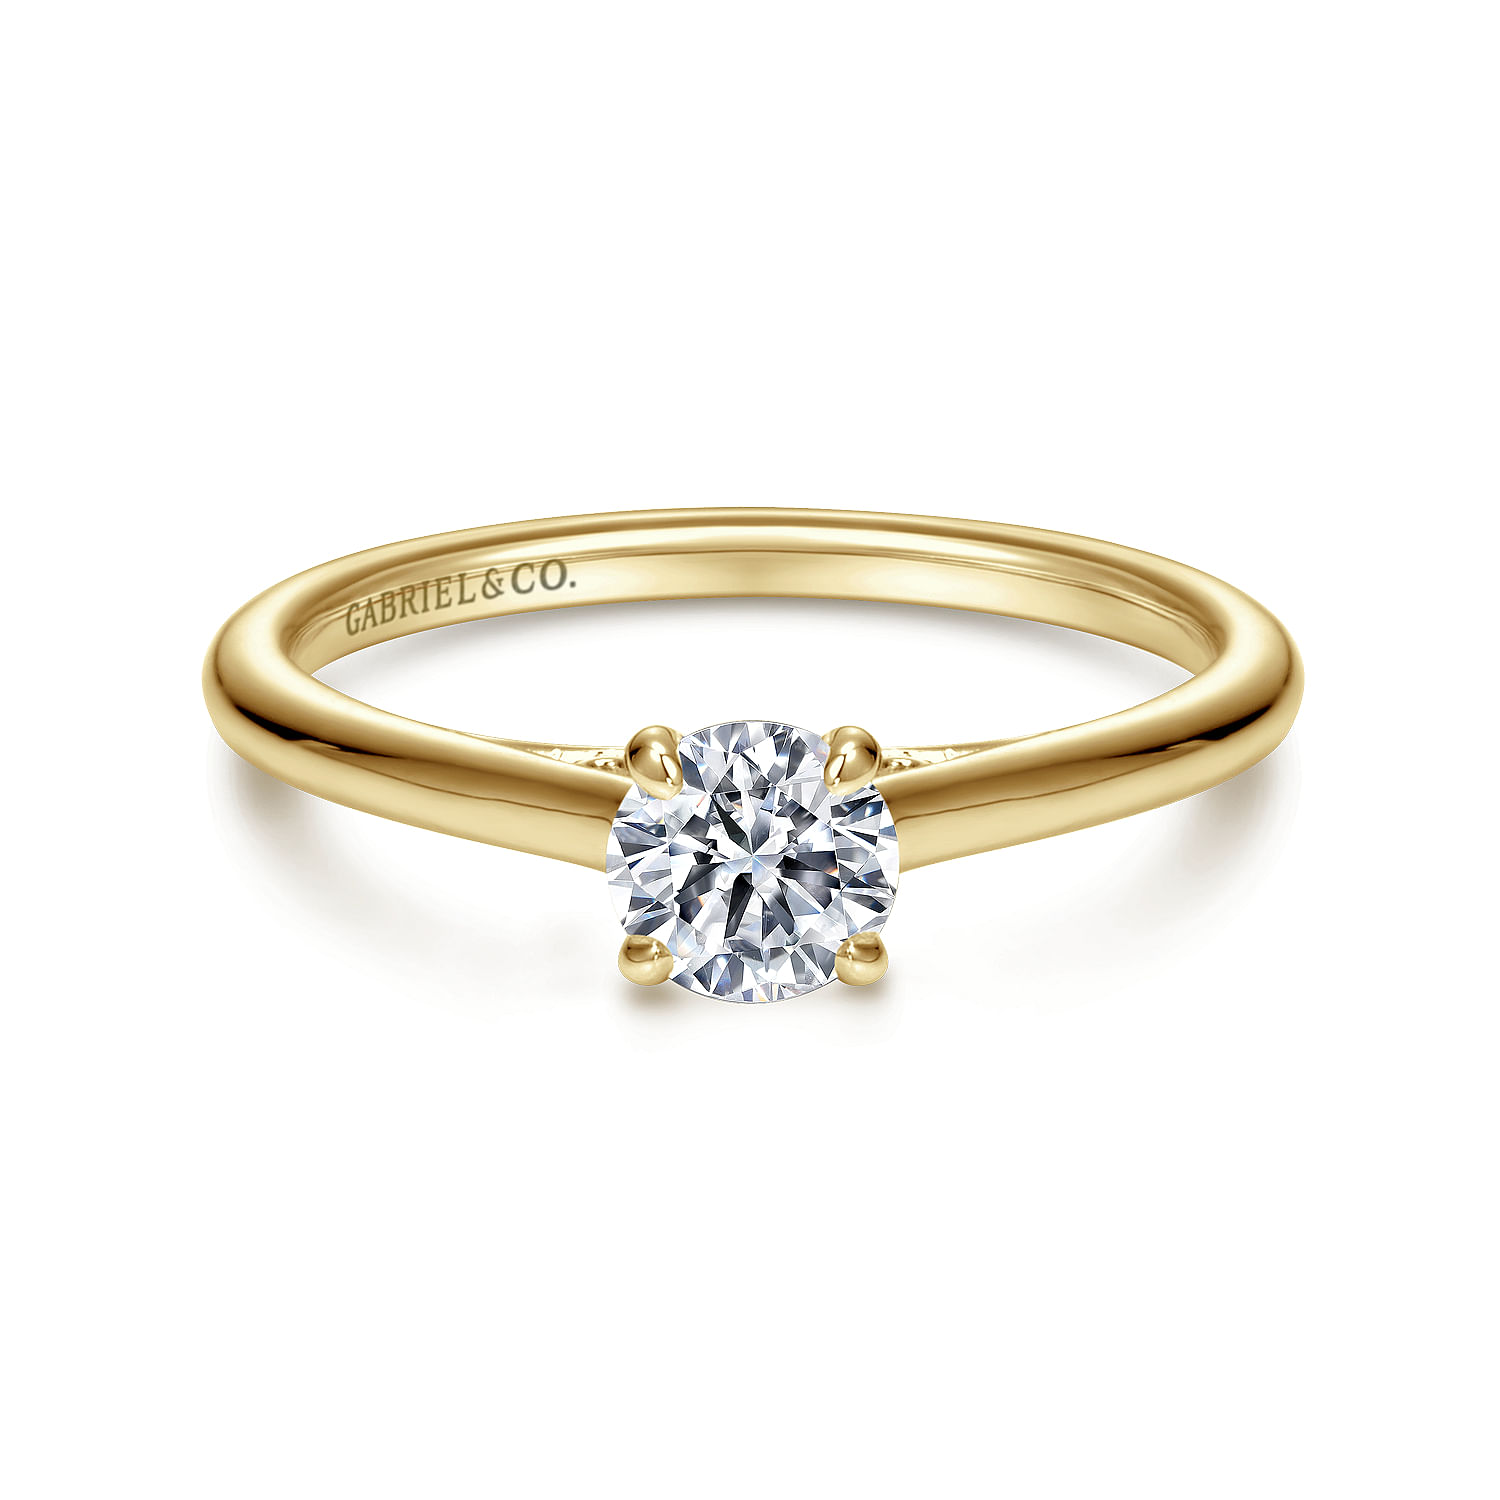 Valerie - 14K Yellow Gold Round Diamond Engagement Ring